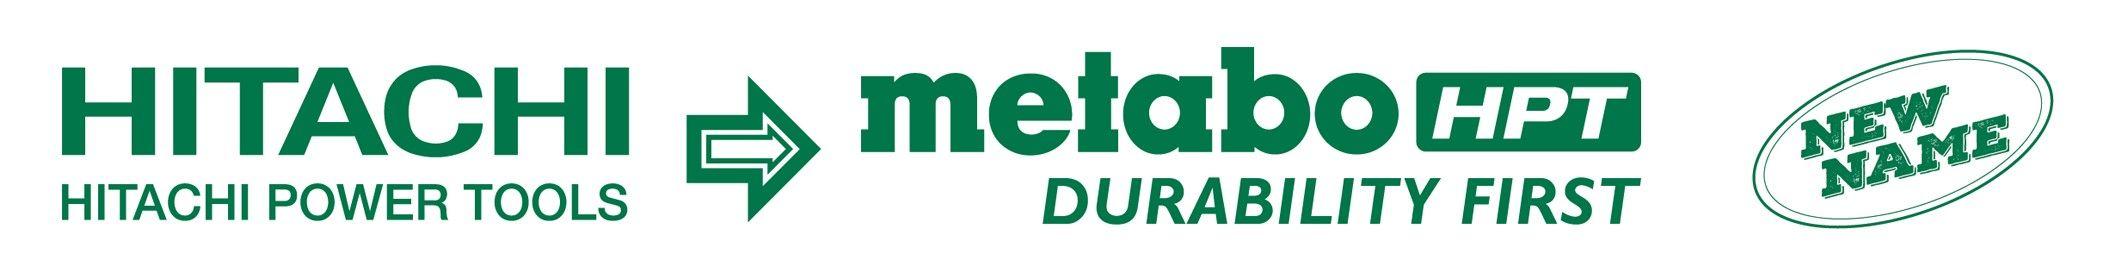 Metabo Logo - Metabo HPT Are Generation T